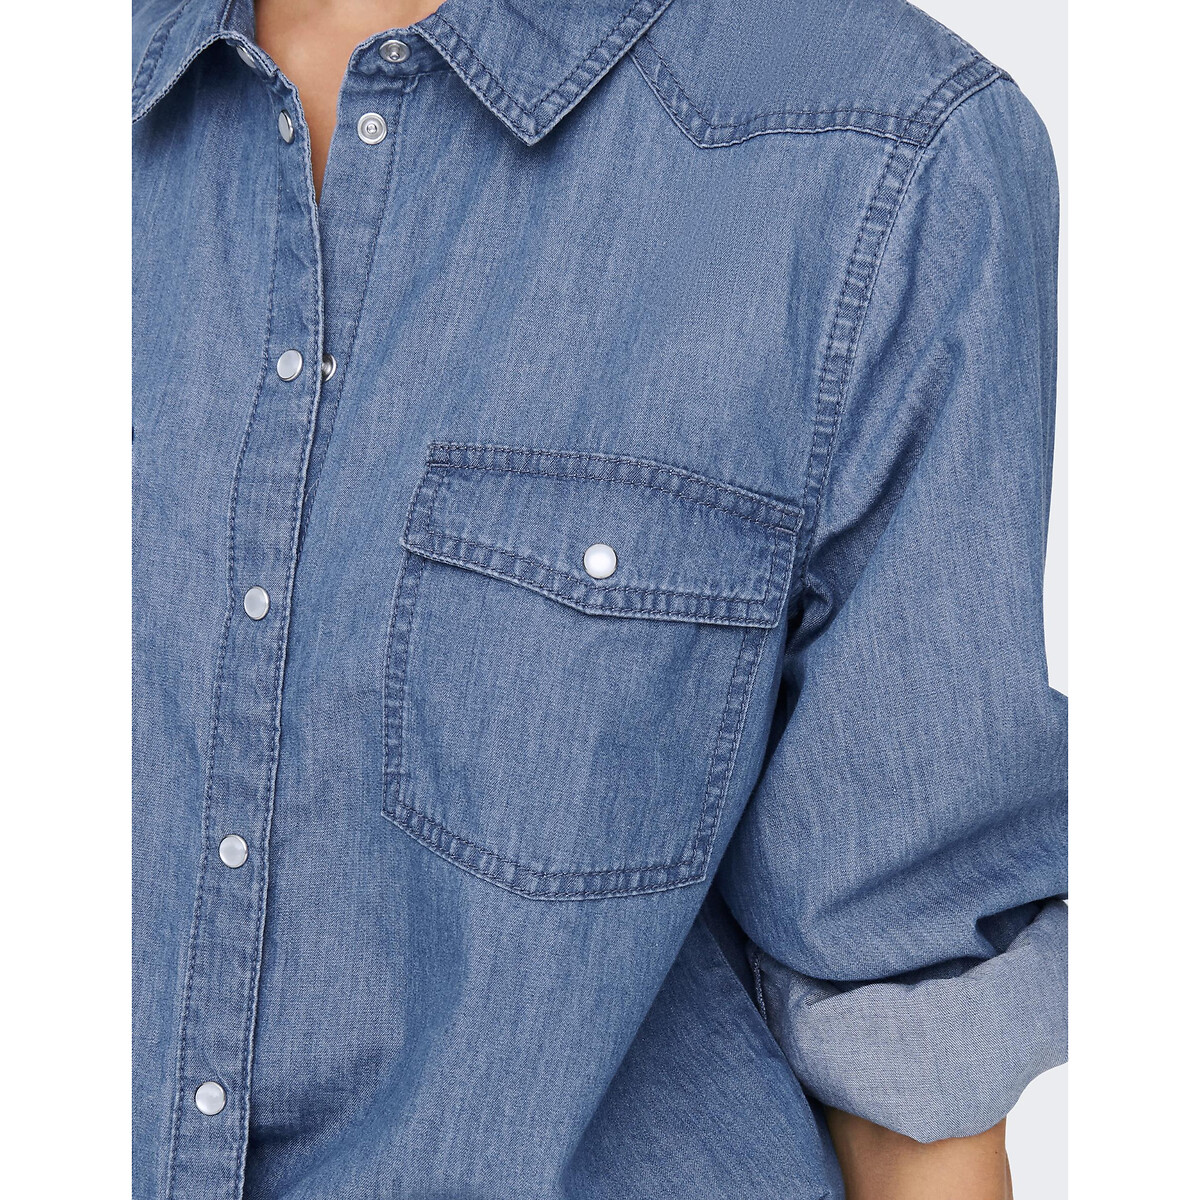 Рубашка Из джинсовой ткани 100 хлопок M синий LaRedoute, размер M - фото 3